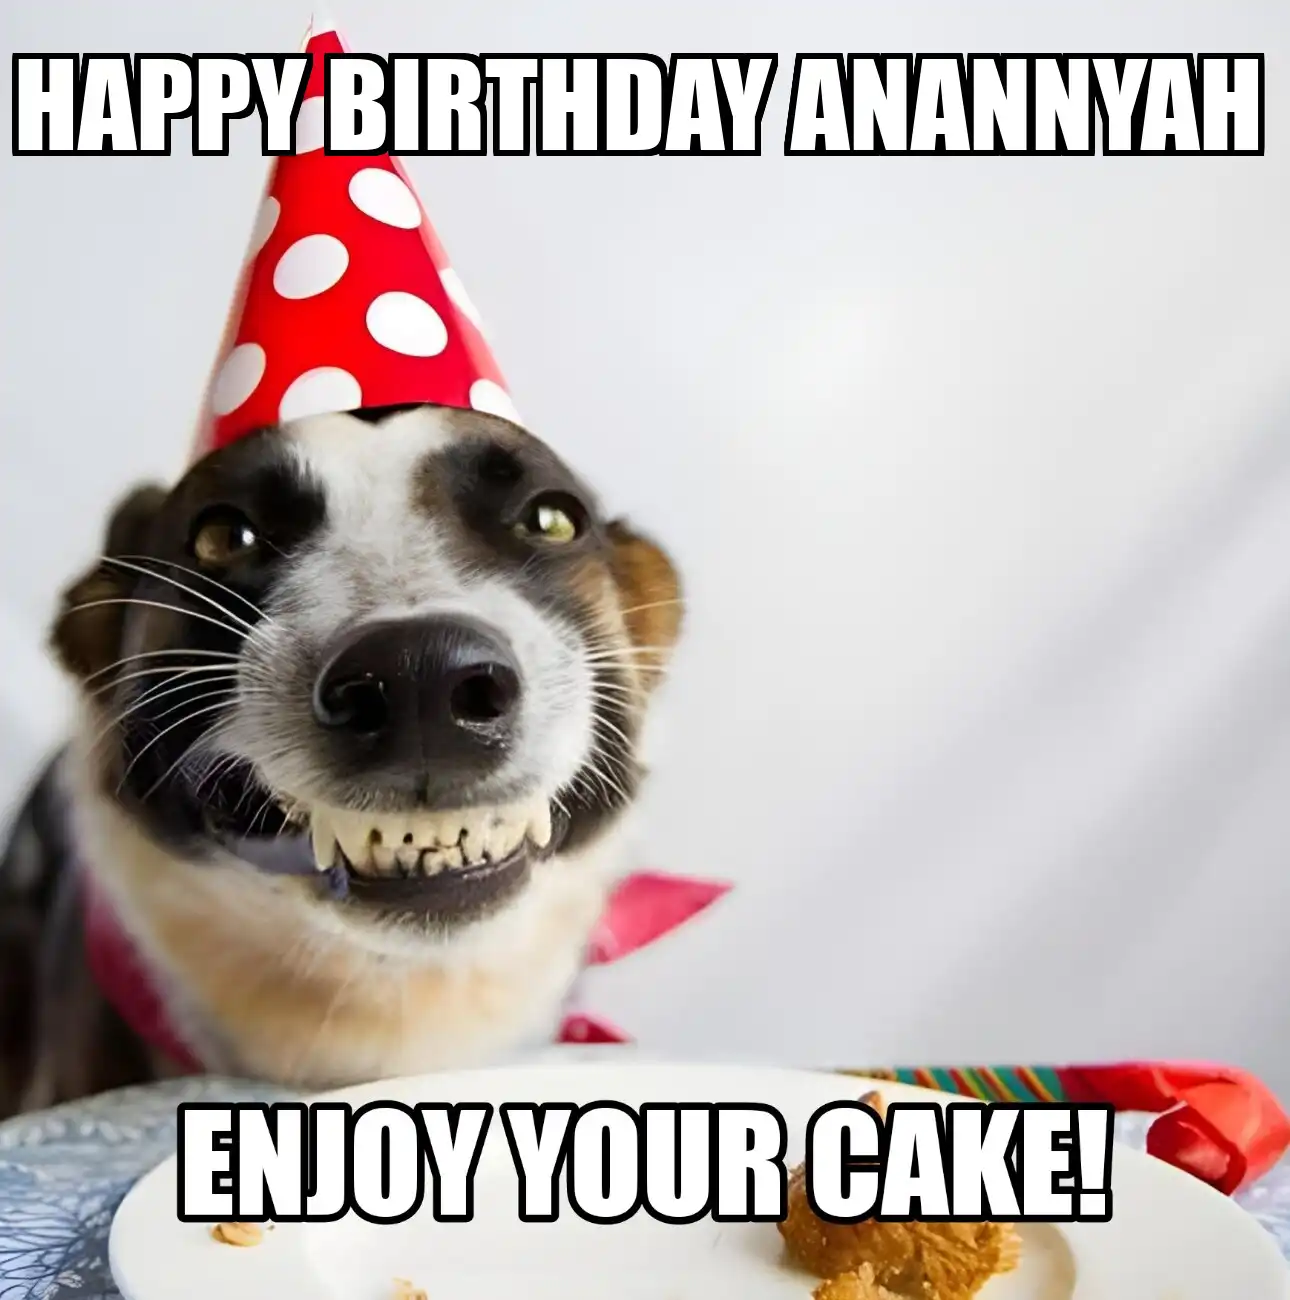 Happy Birthday Anannyah Enjoy Your Cake Dog Meme